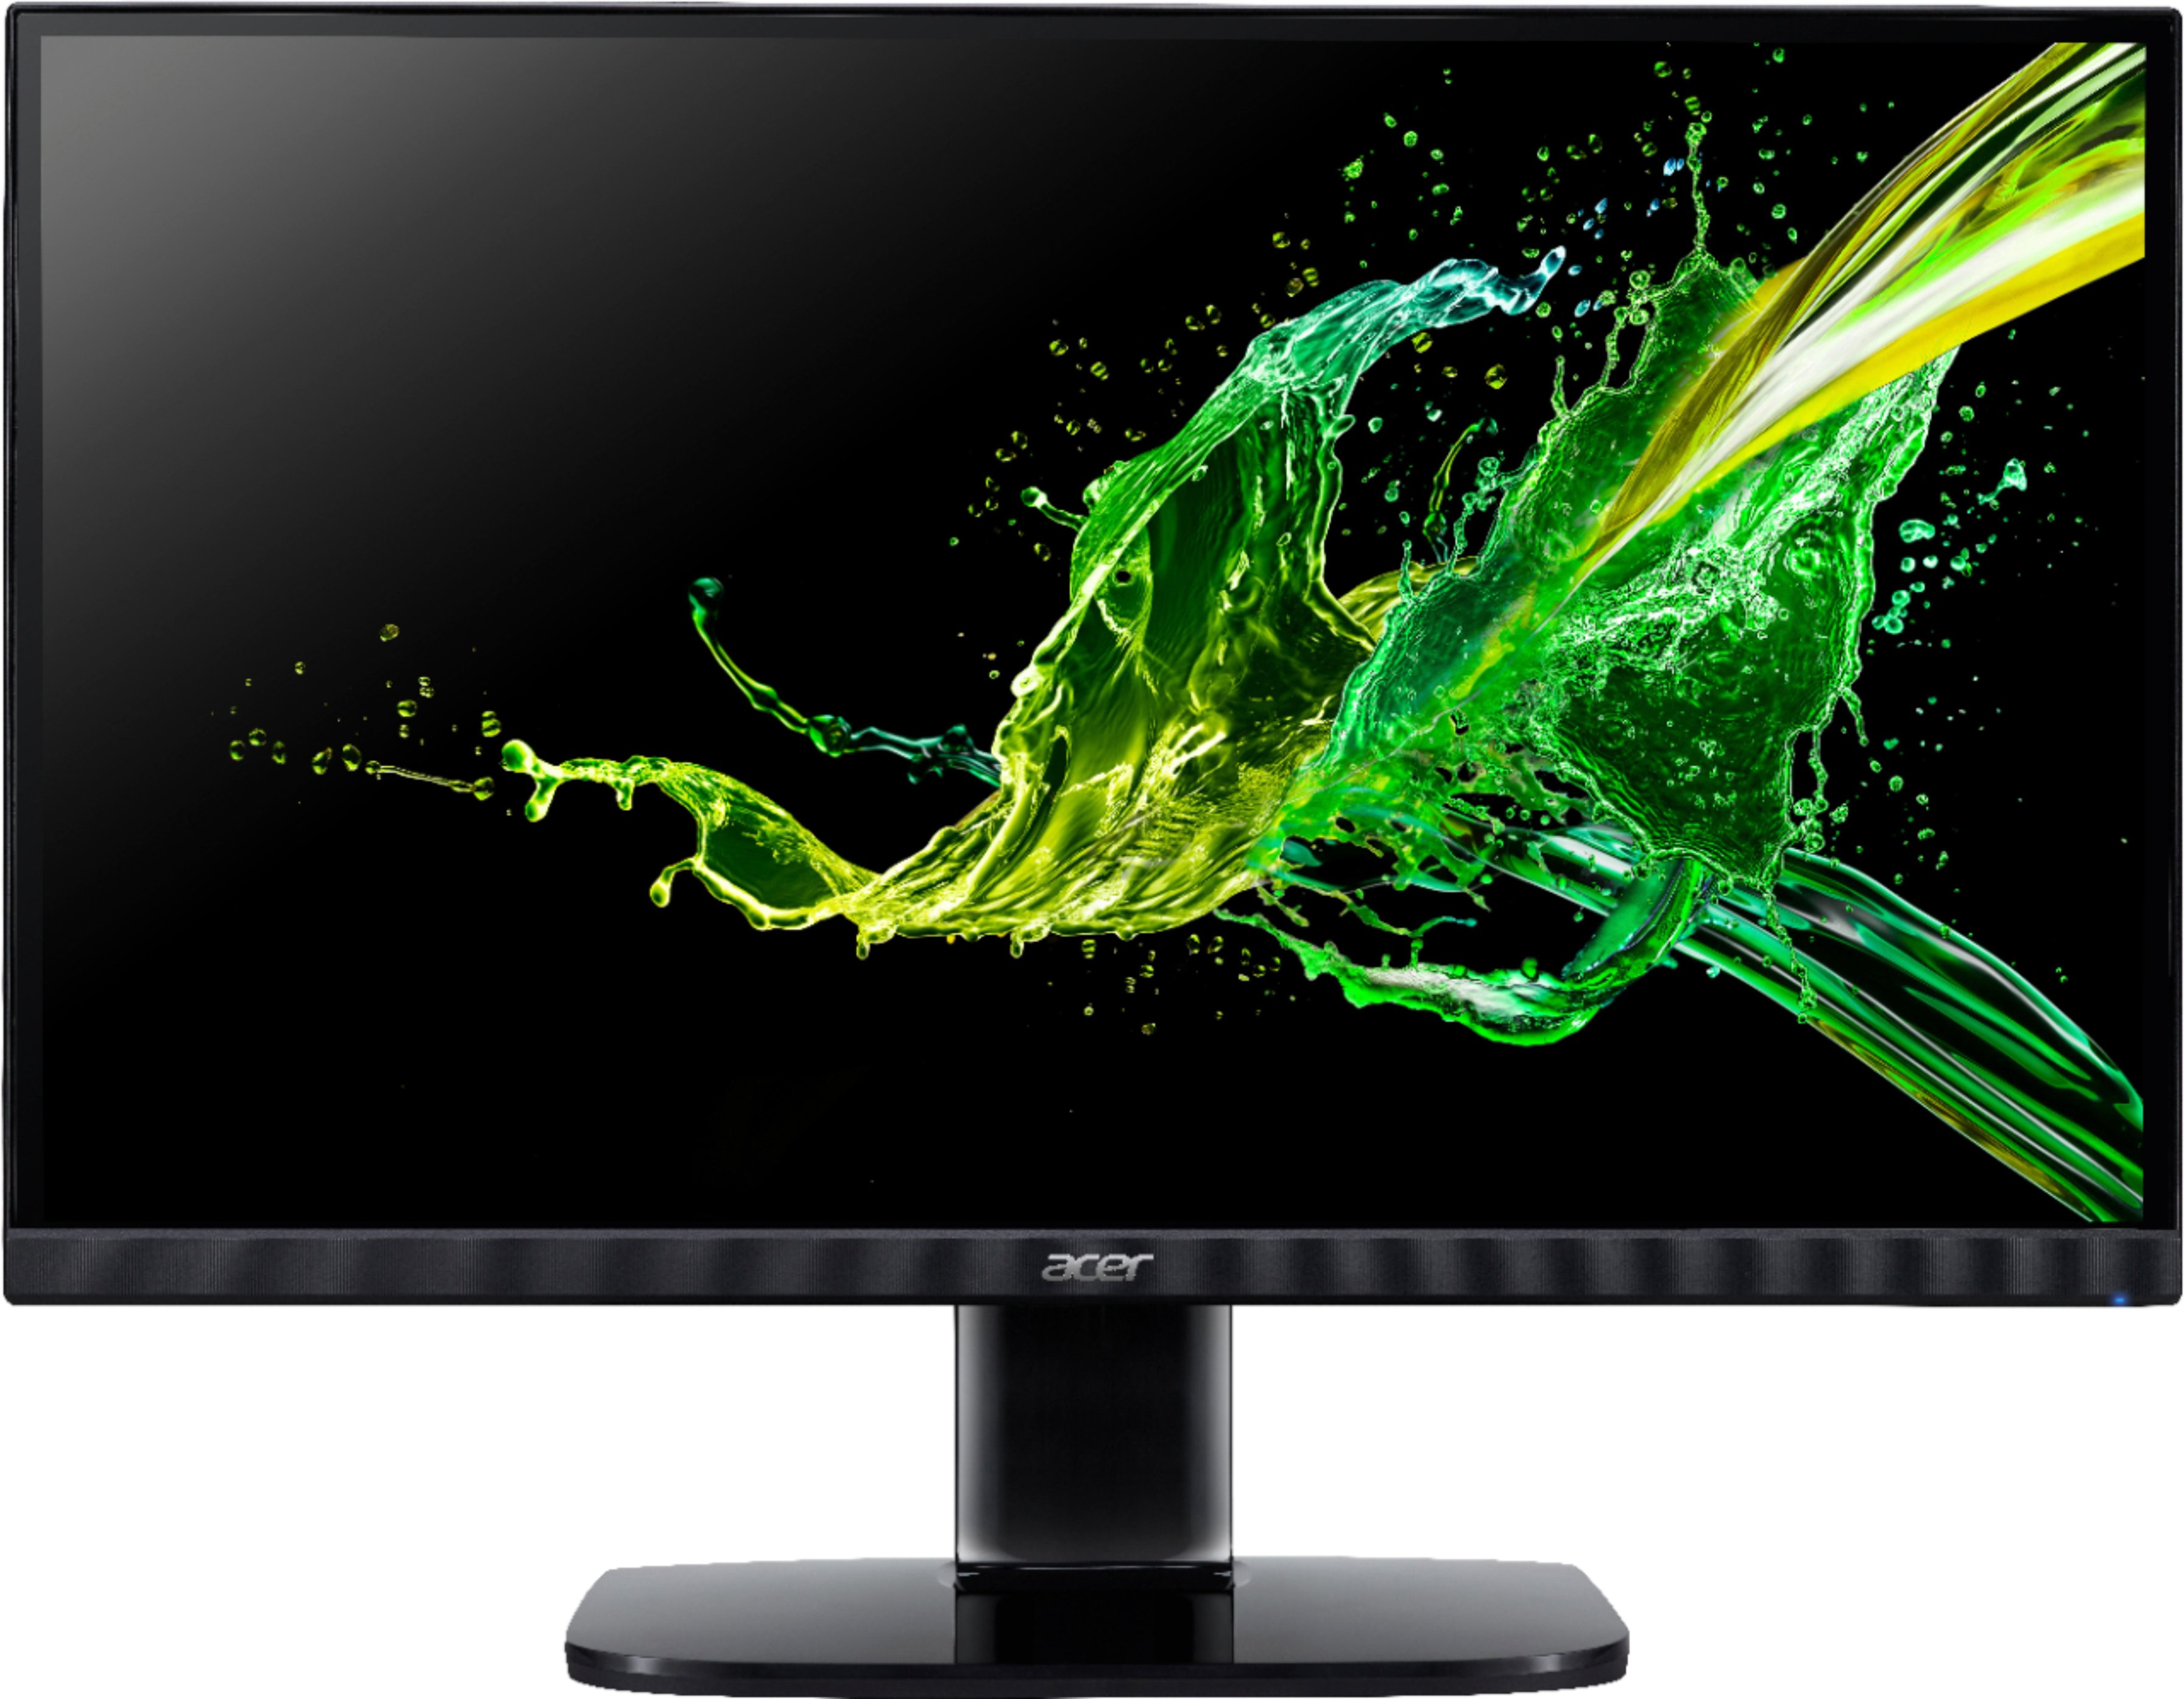 Acer 27" LCD Monitor Display KA270H Full HD Backlit 1920x1080 4ms Response Time 